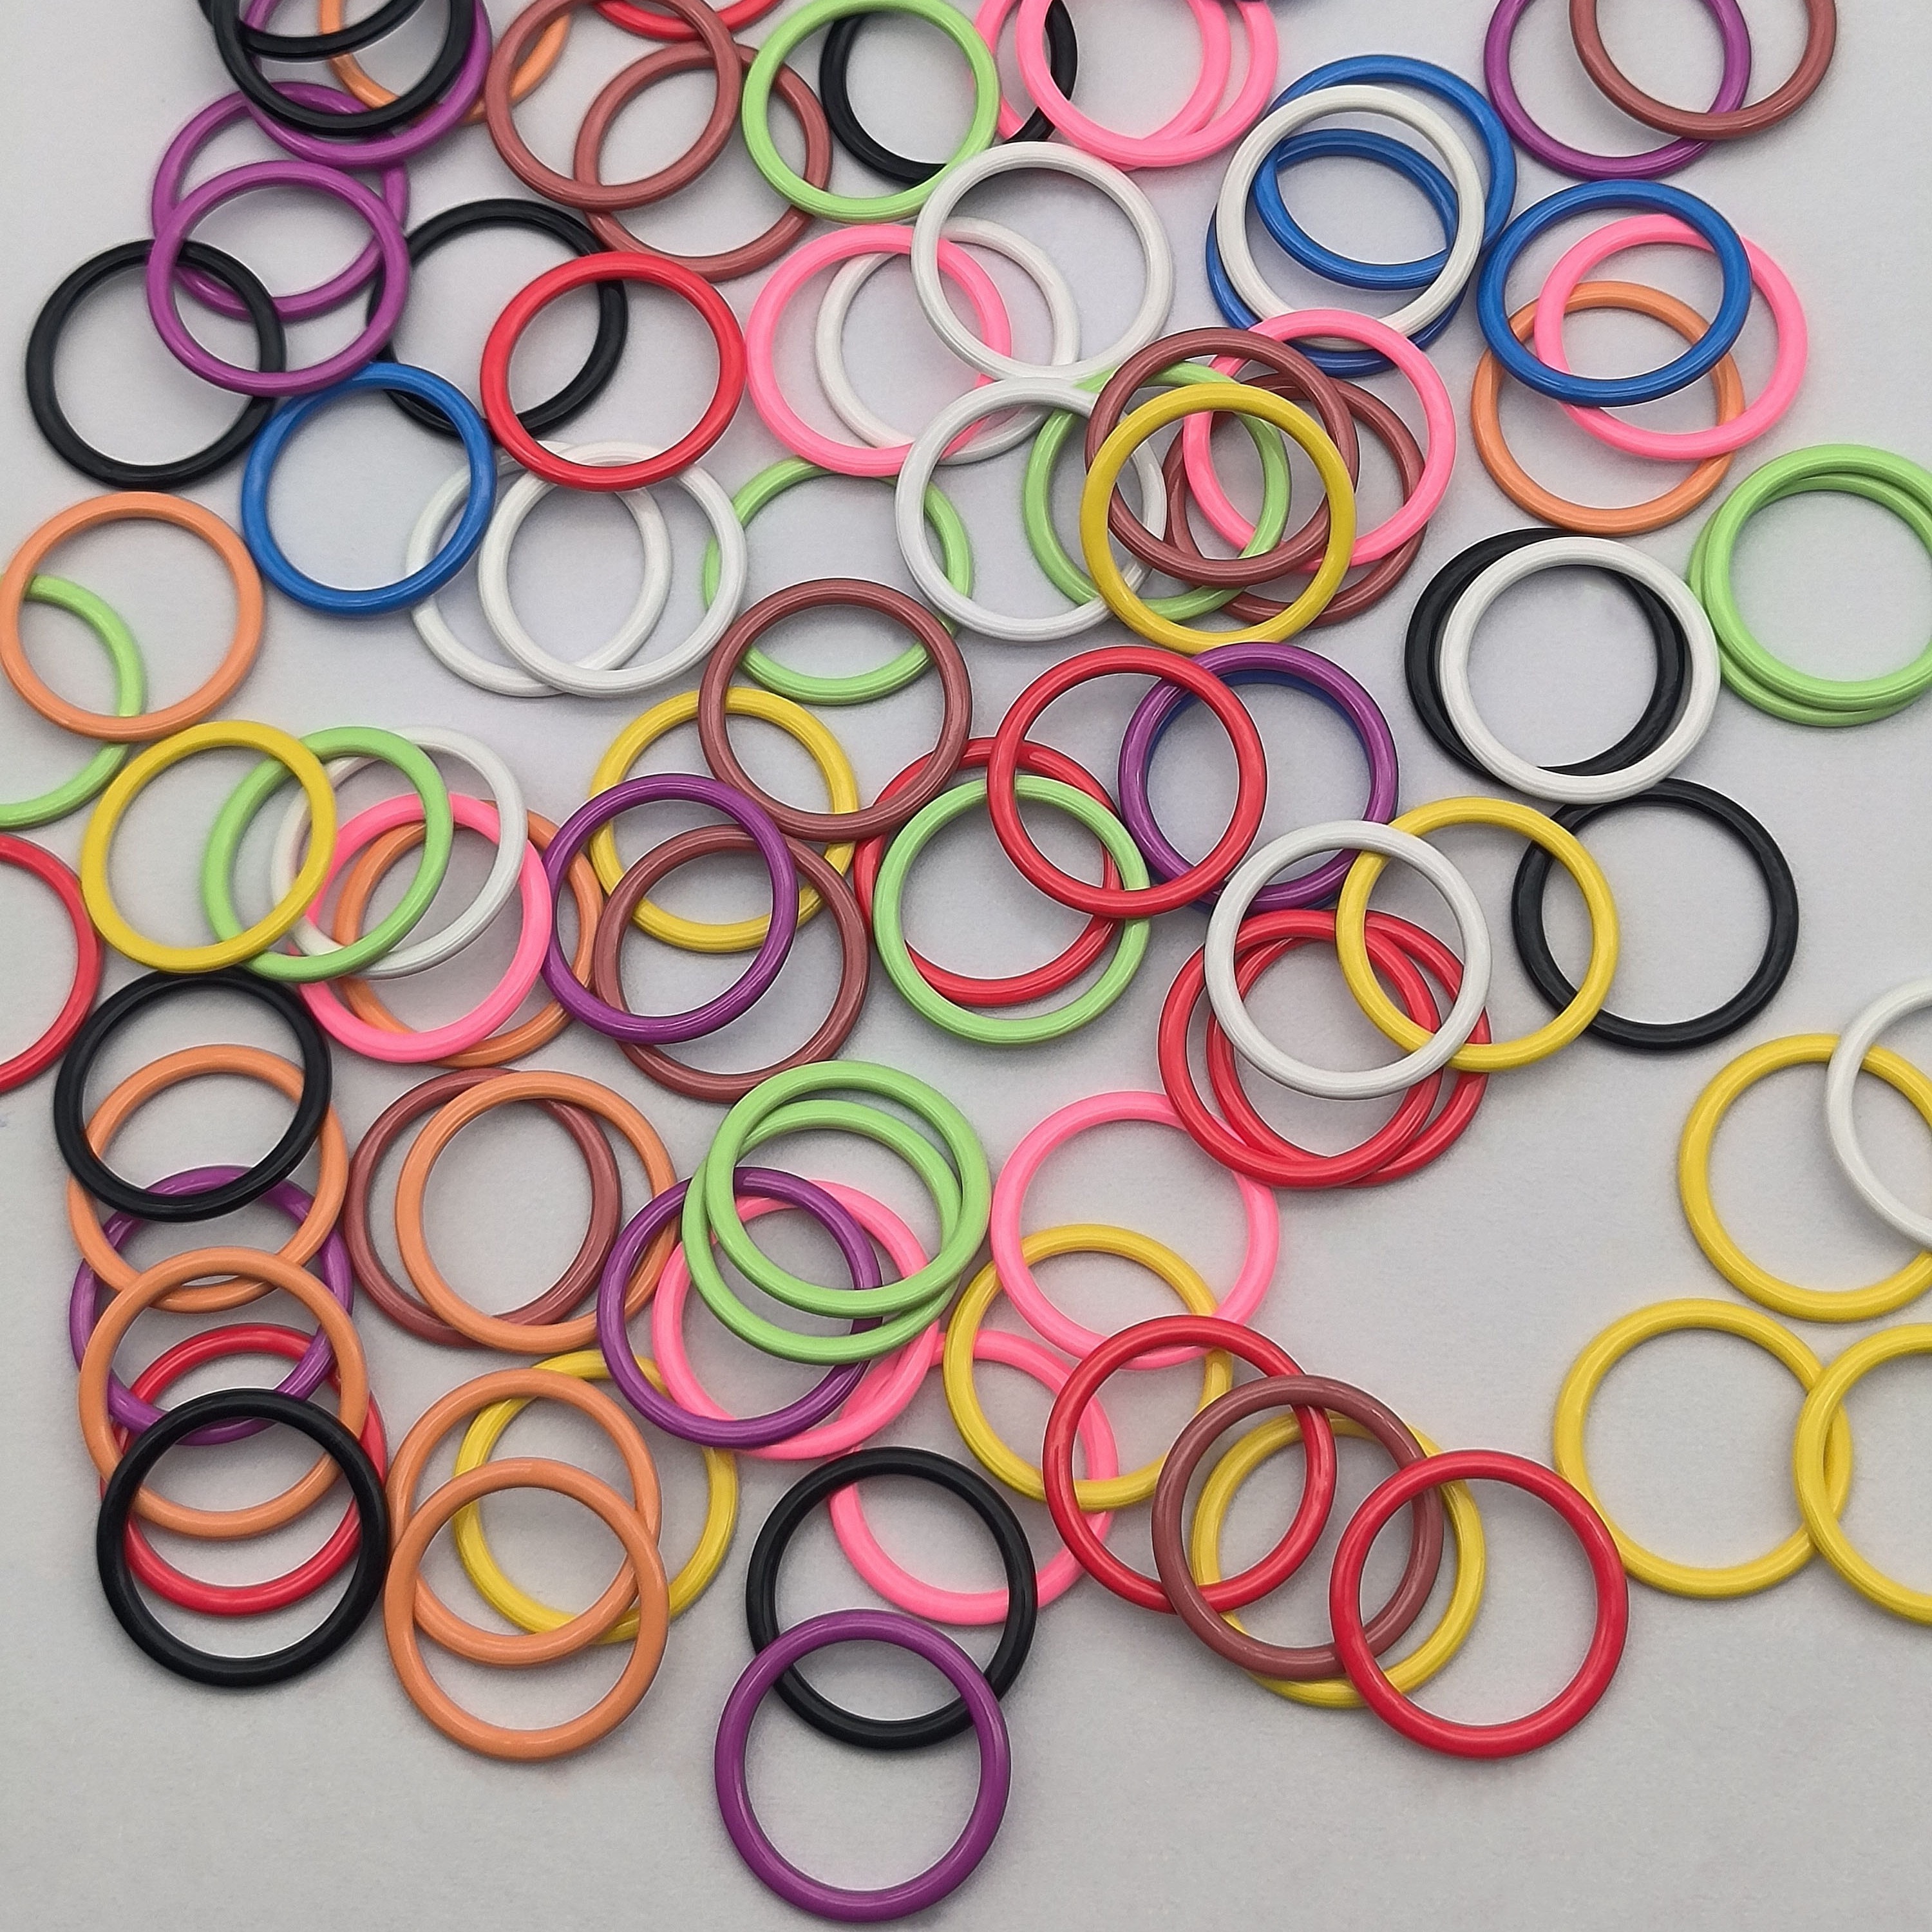 LMDZ 150/100/104 Pcs Locking Stitch Markers Colorful Plastic